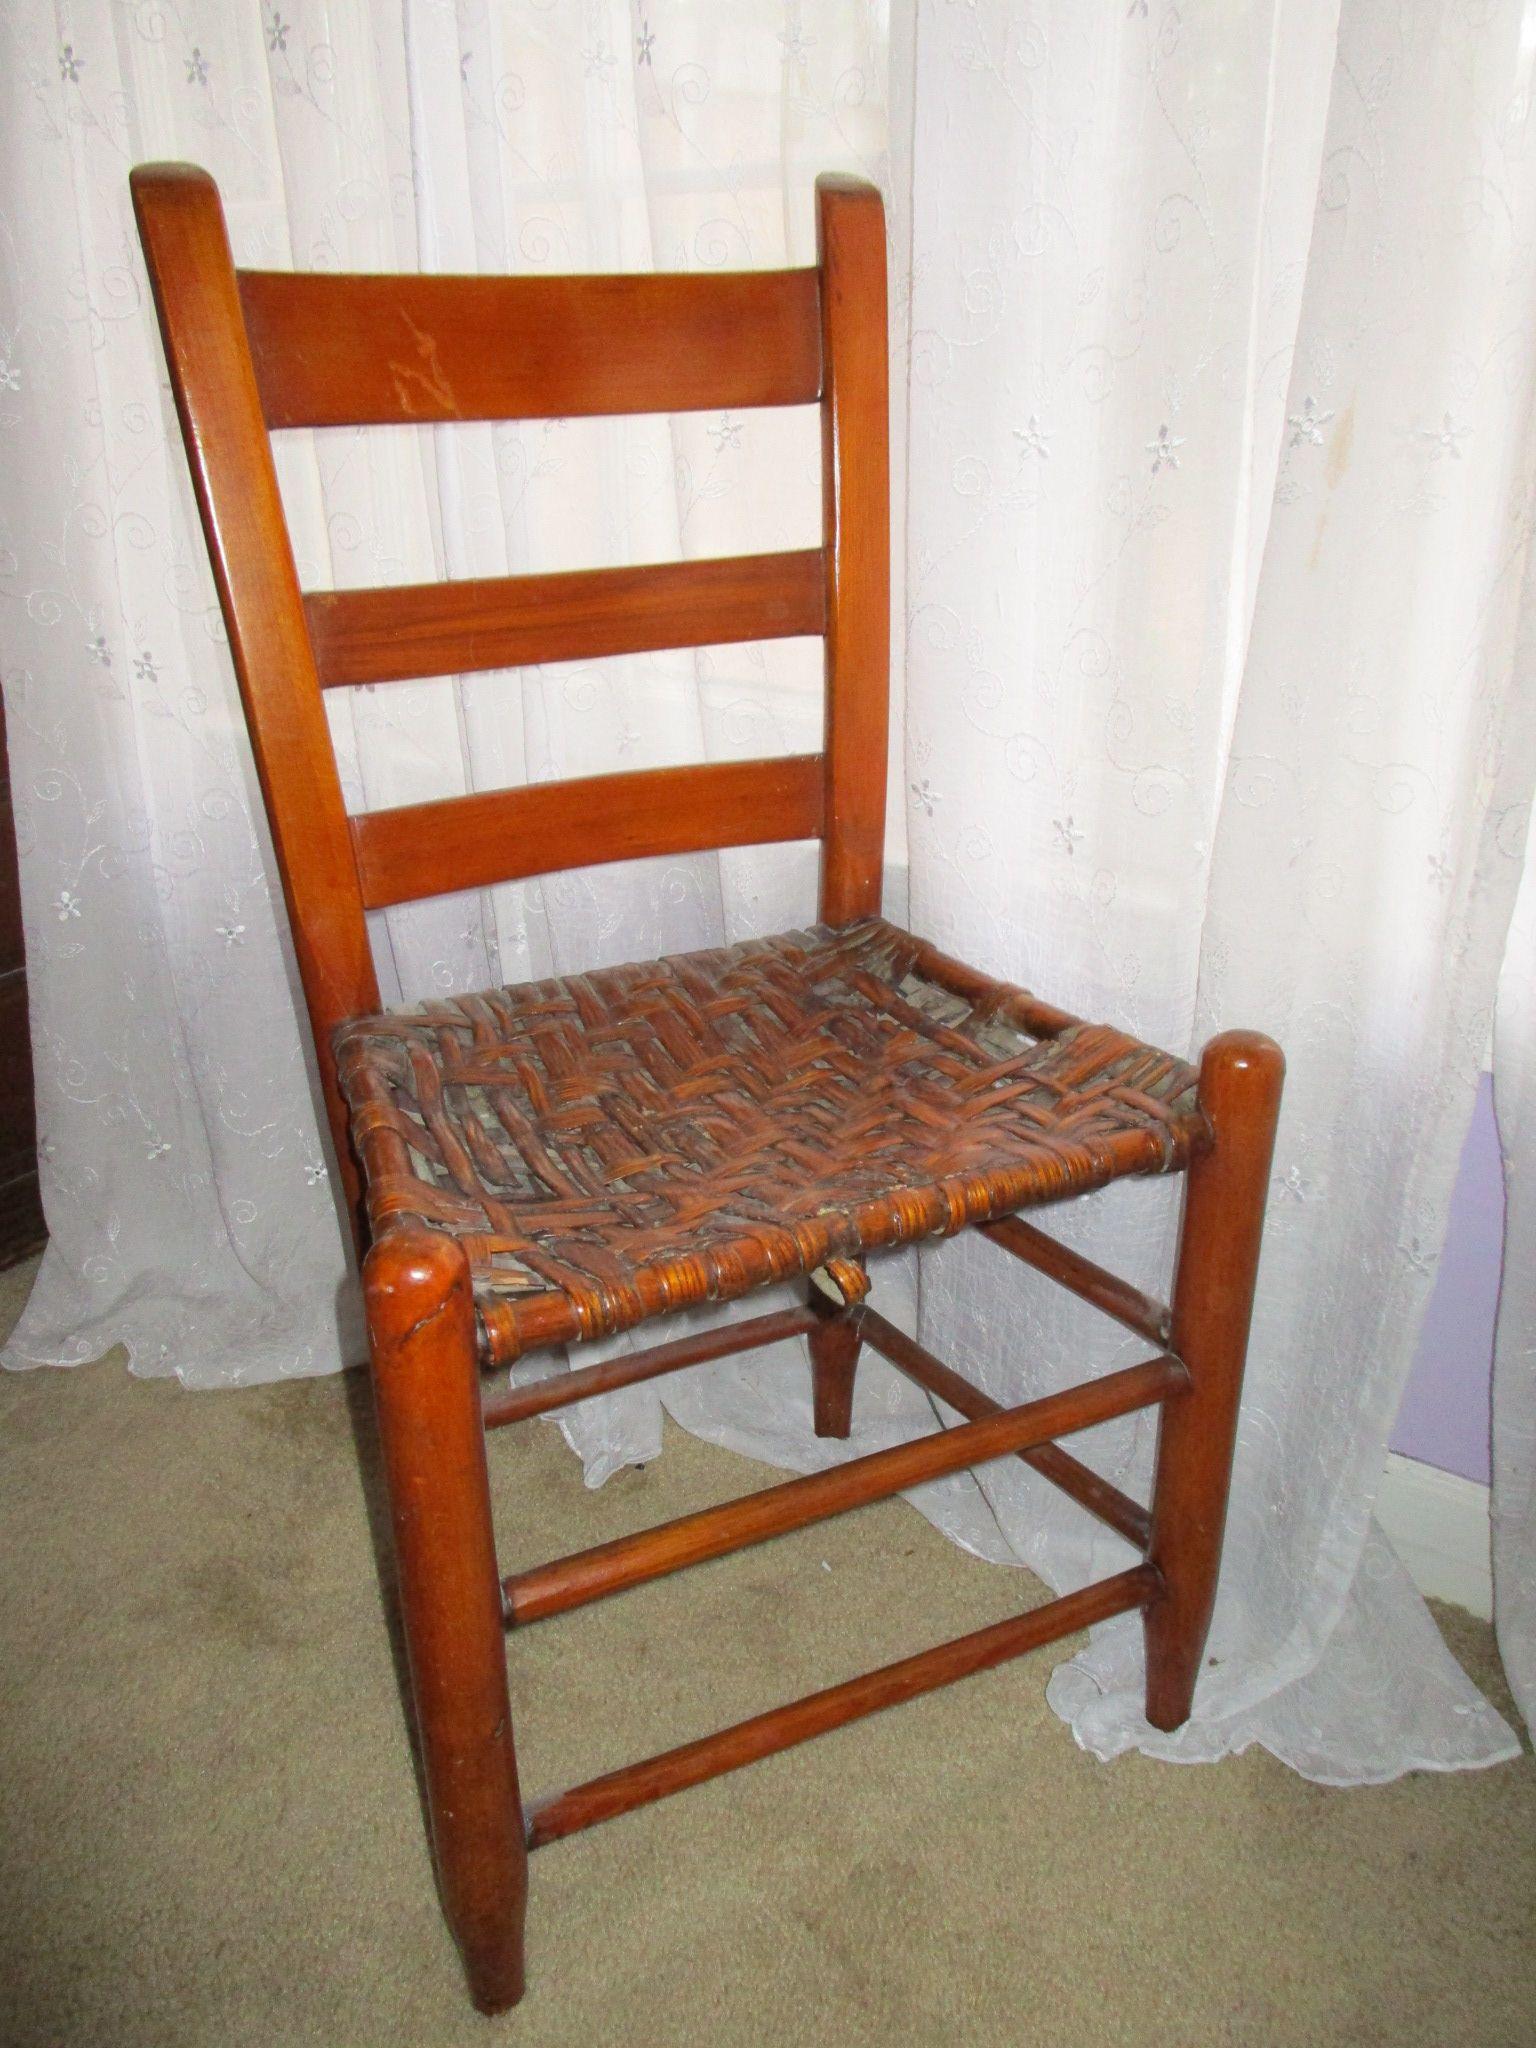 Early Slat Back Chair w/ Woven Seat